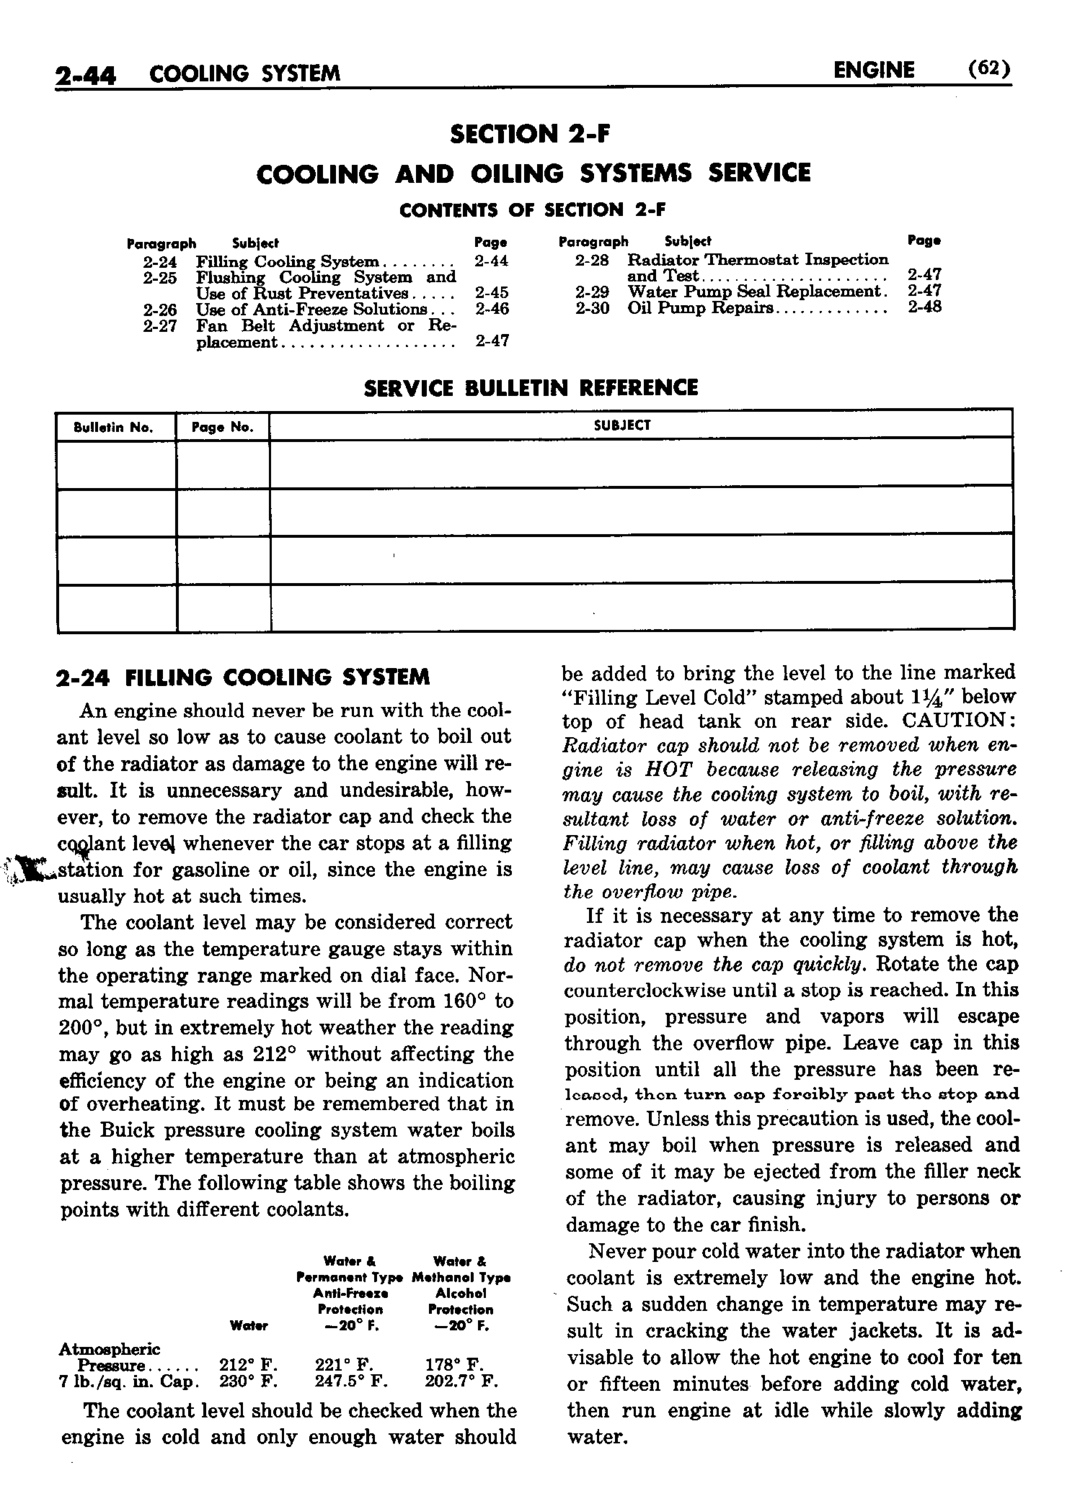 n_03 1952 Buick Shop Manual - Engine-044-044.jpg